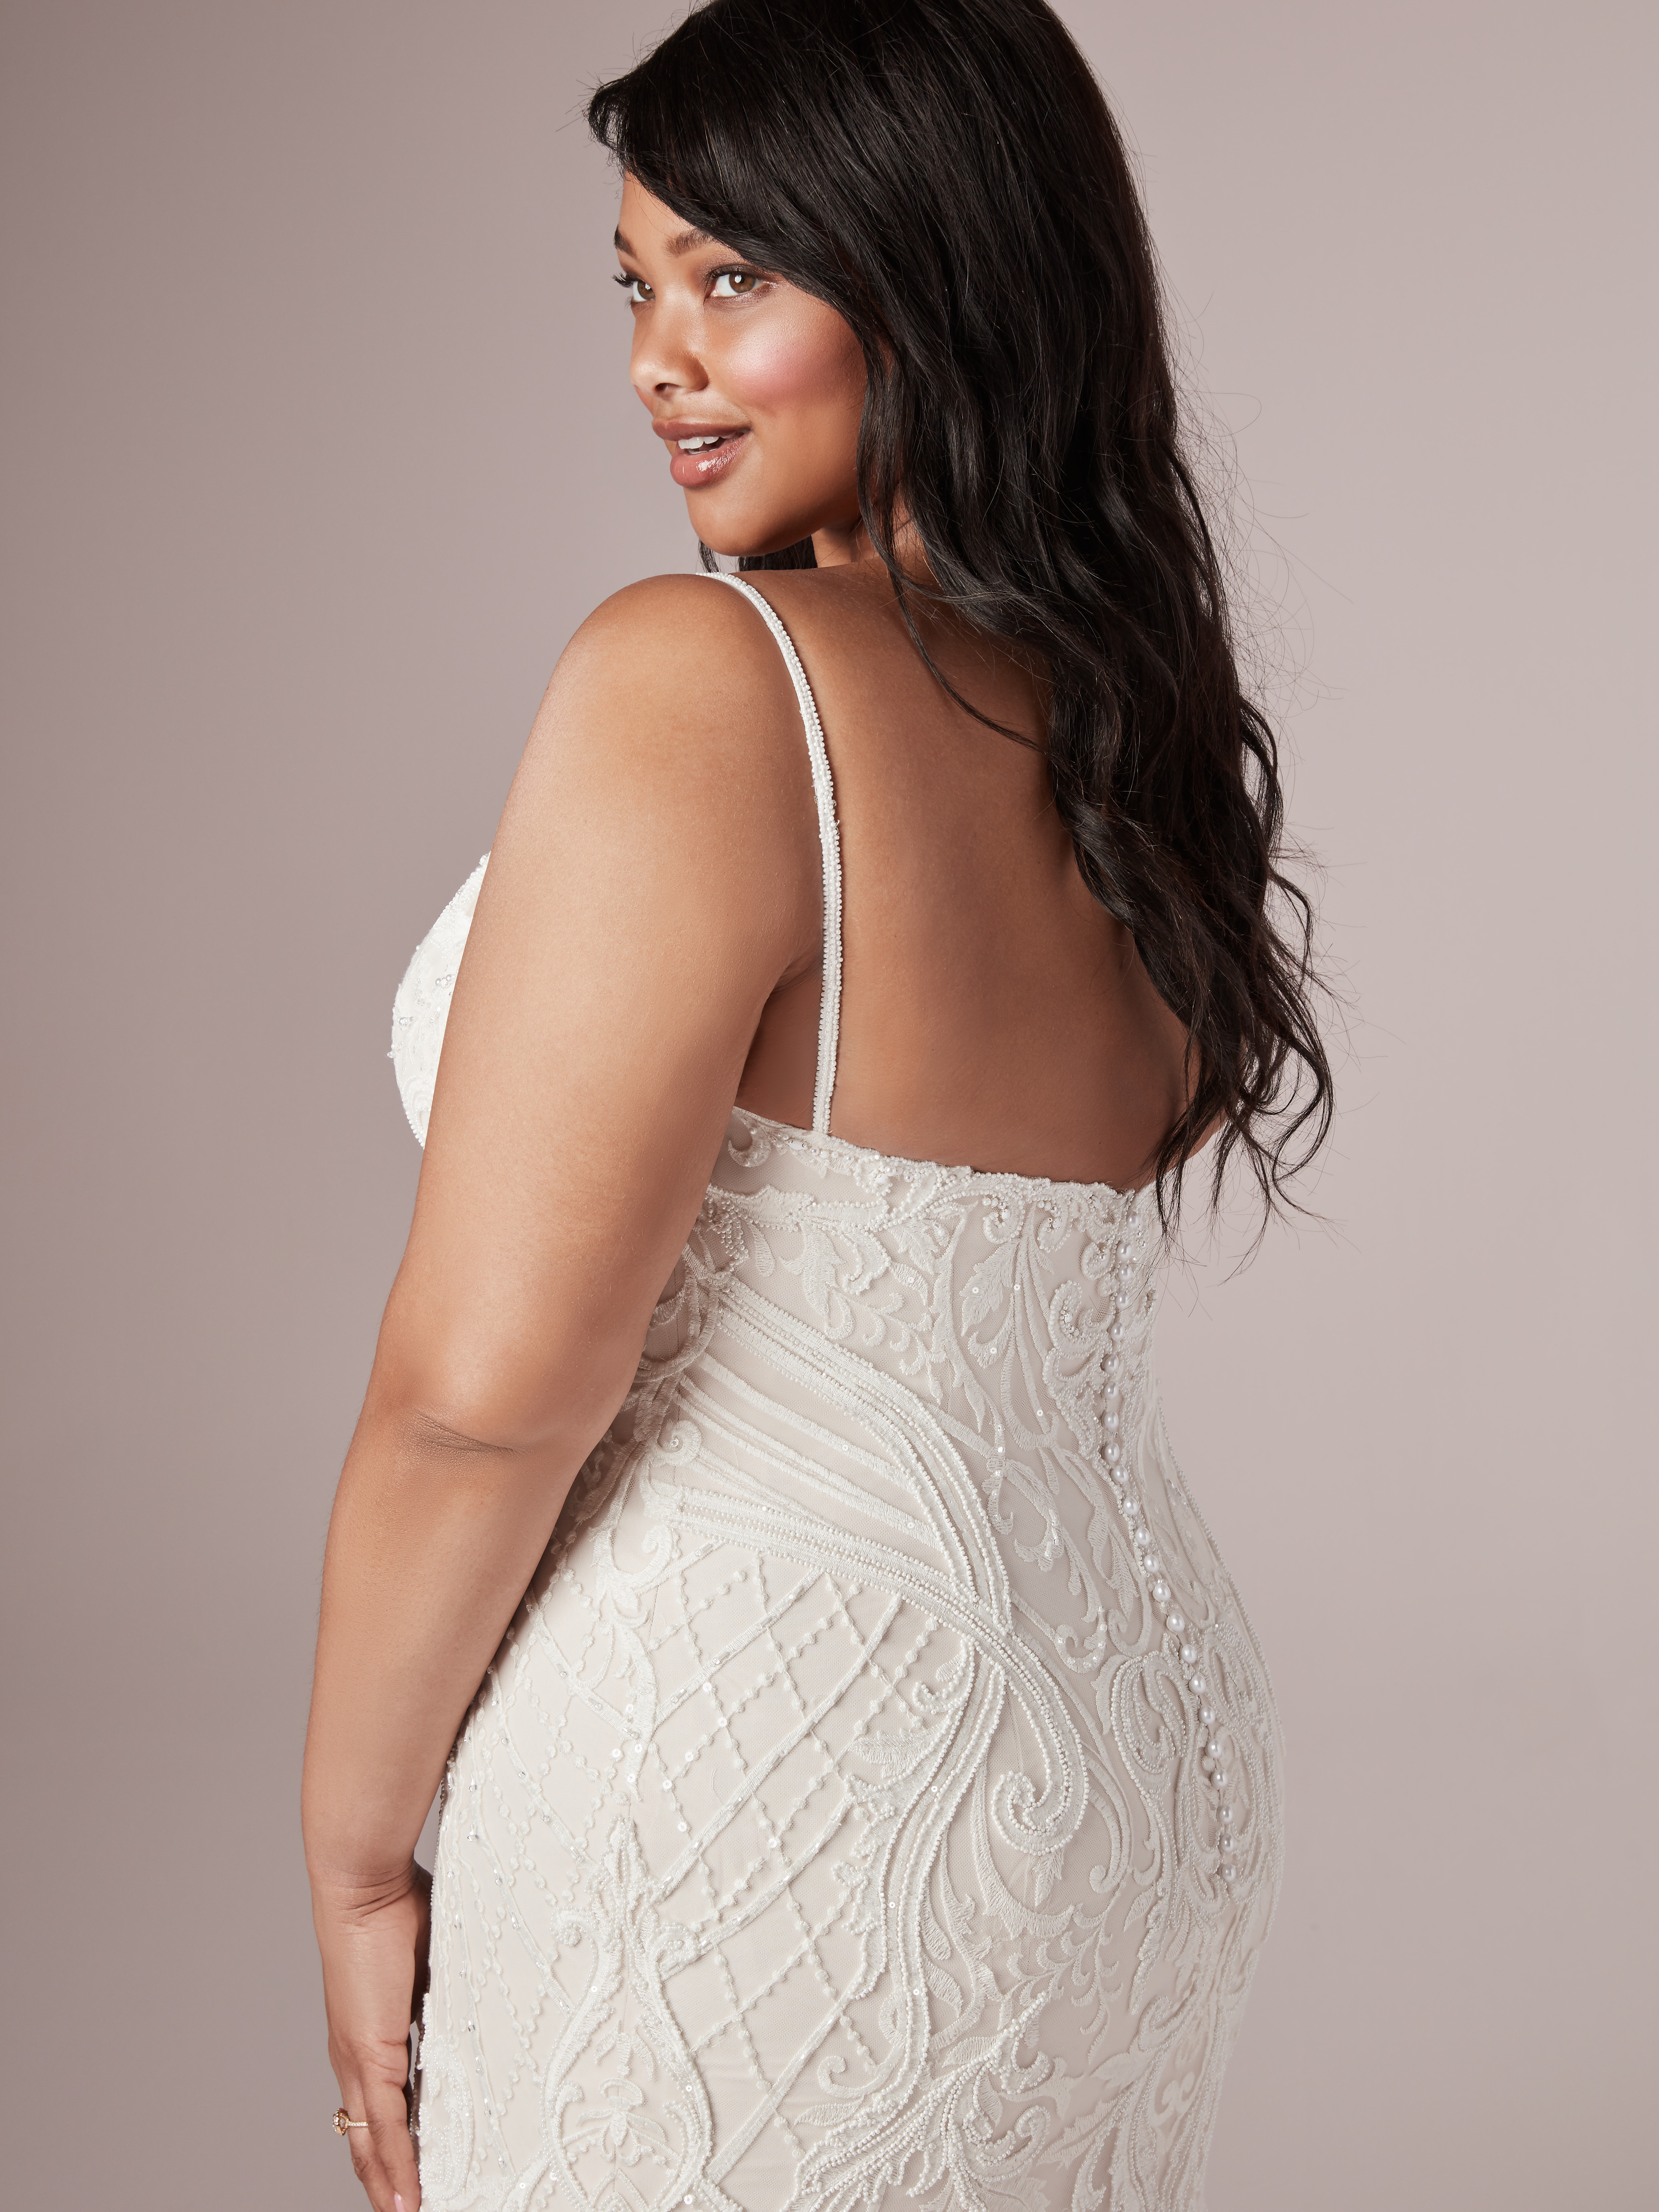 Plus Size Model From Back Wearing Beach Sheath Wedding Dress Called Corrine by Rebecca Ingram